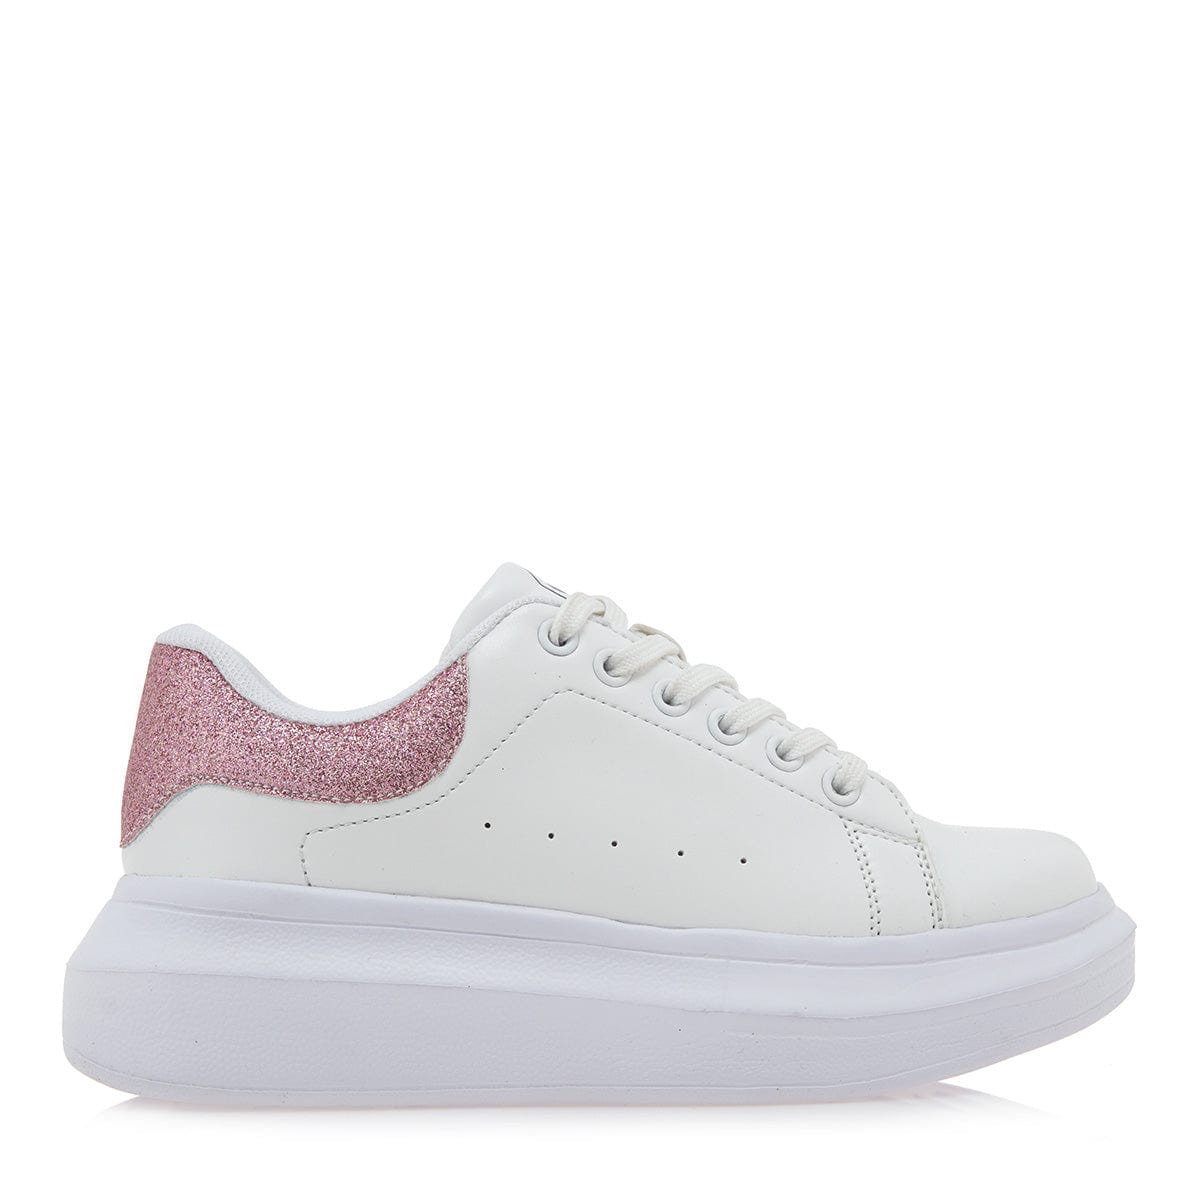 Exe kids sneakers λευκό ροζ glitter  701-La Scarpa Shoes Exe kids sneakers λευκό ροζ glitter  701 GIRLS EXE KIDS